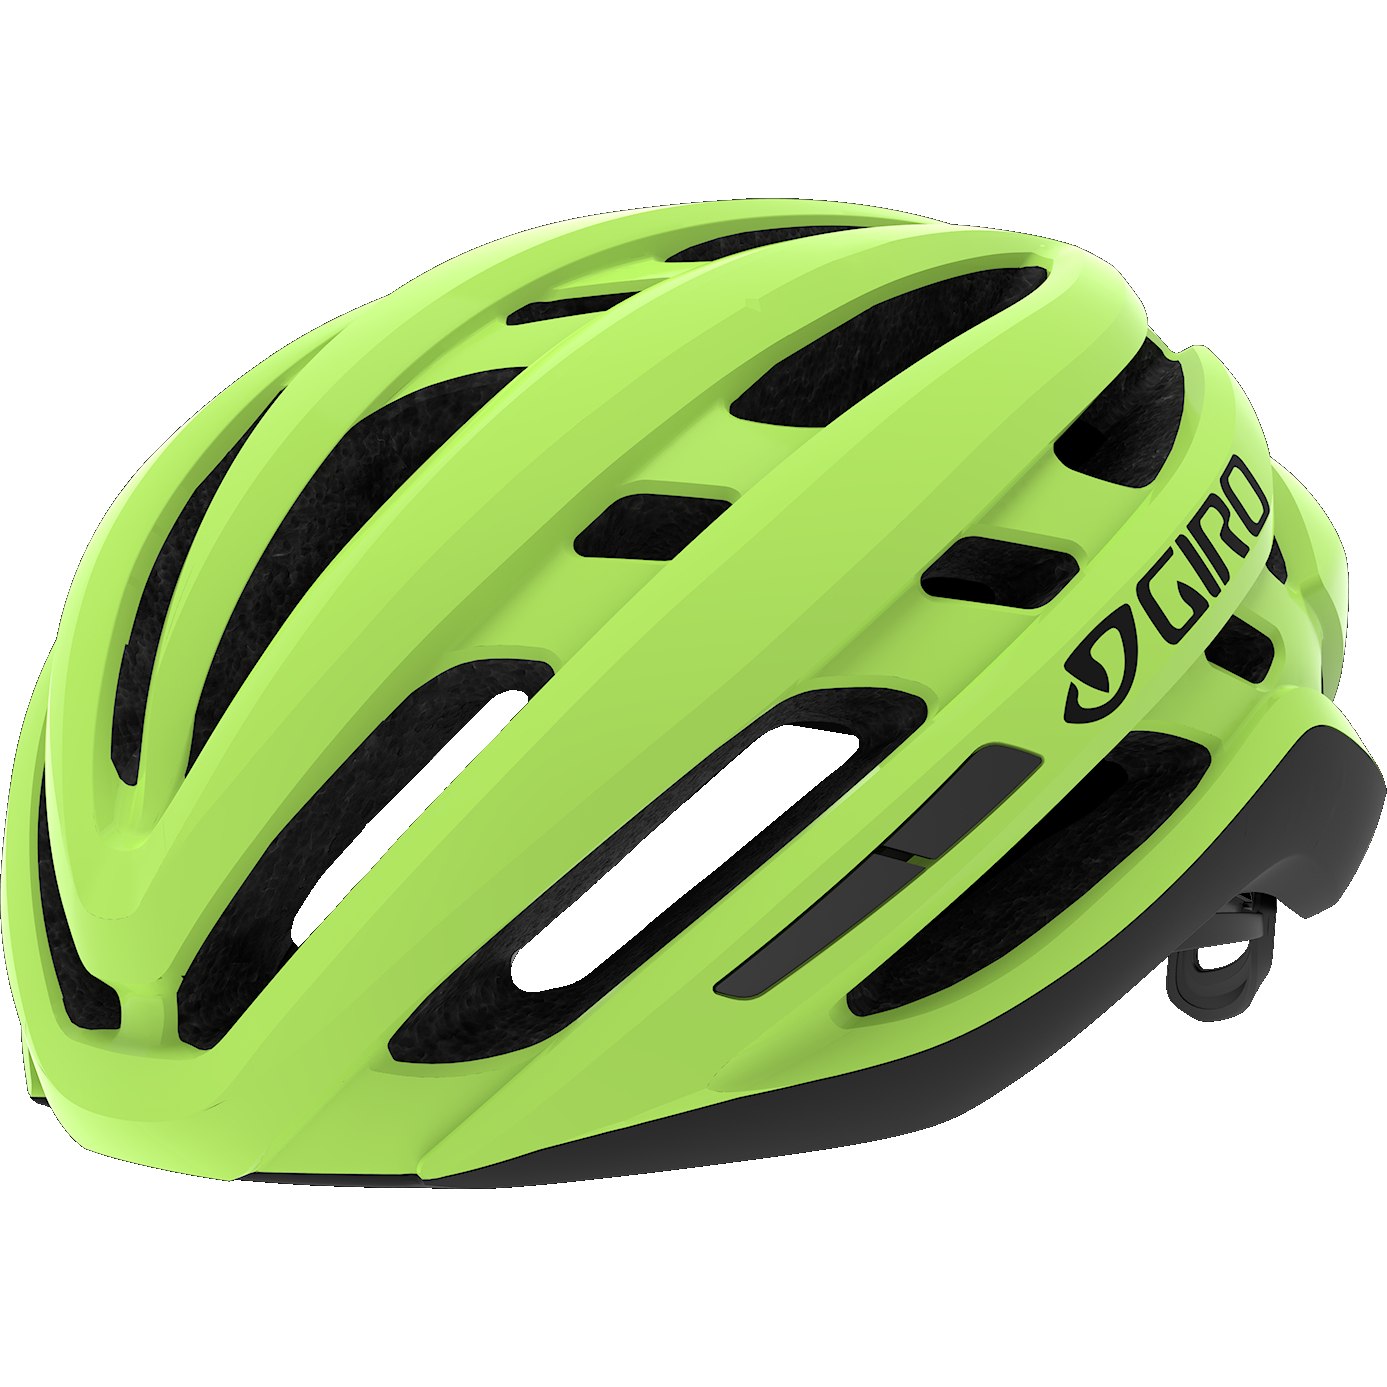 Picture of Giro Agilis MIPS Helmet - highlight yellow